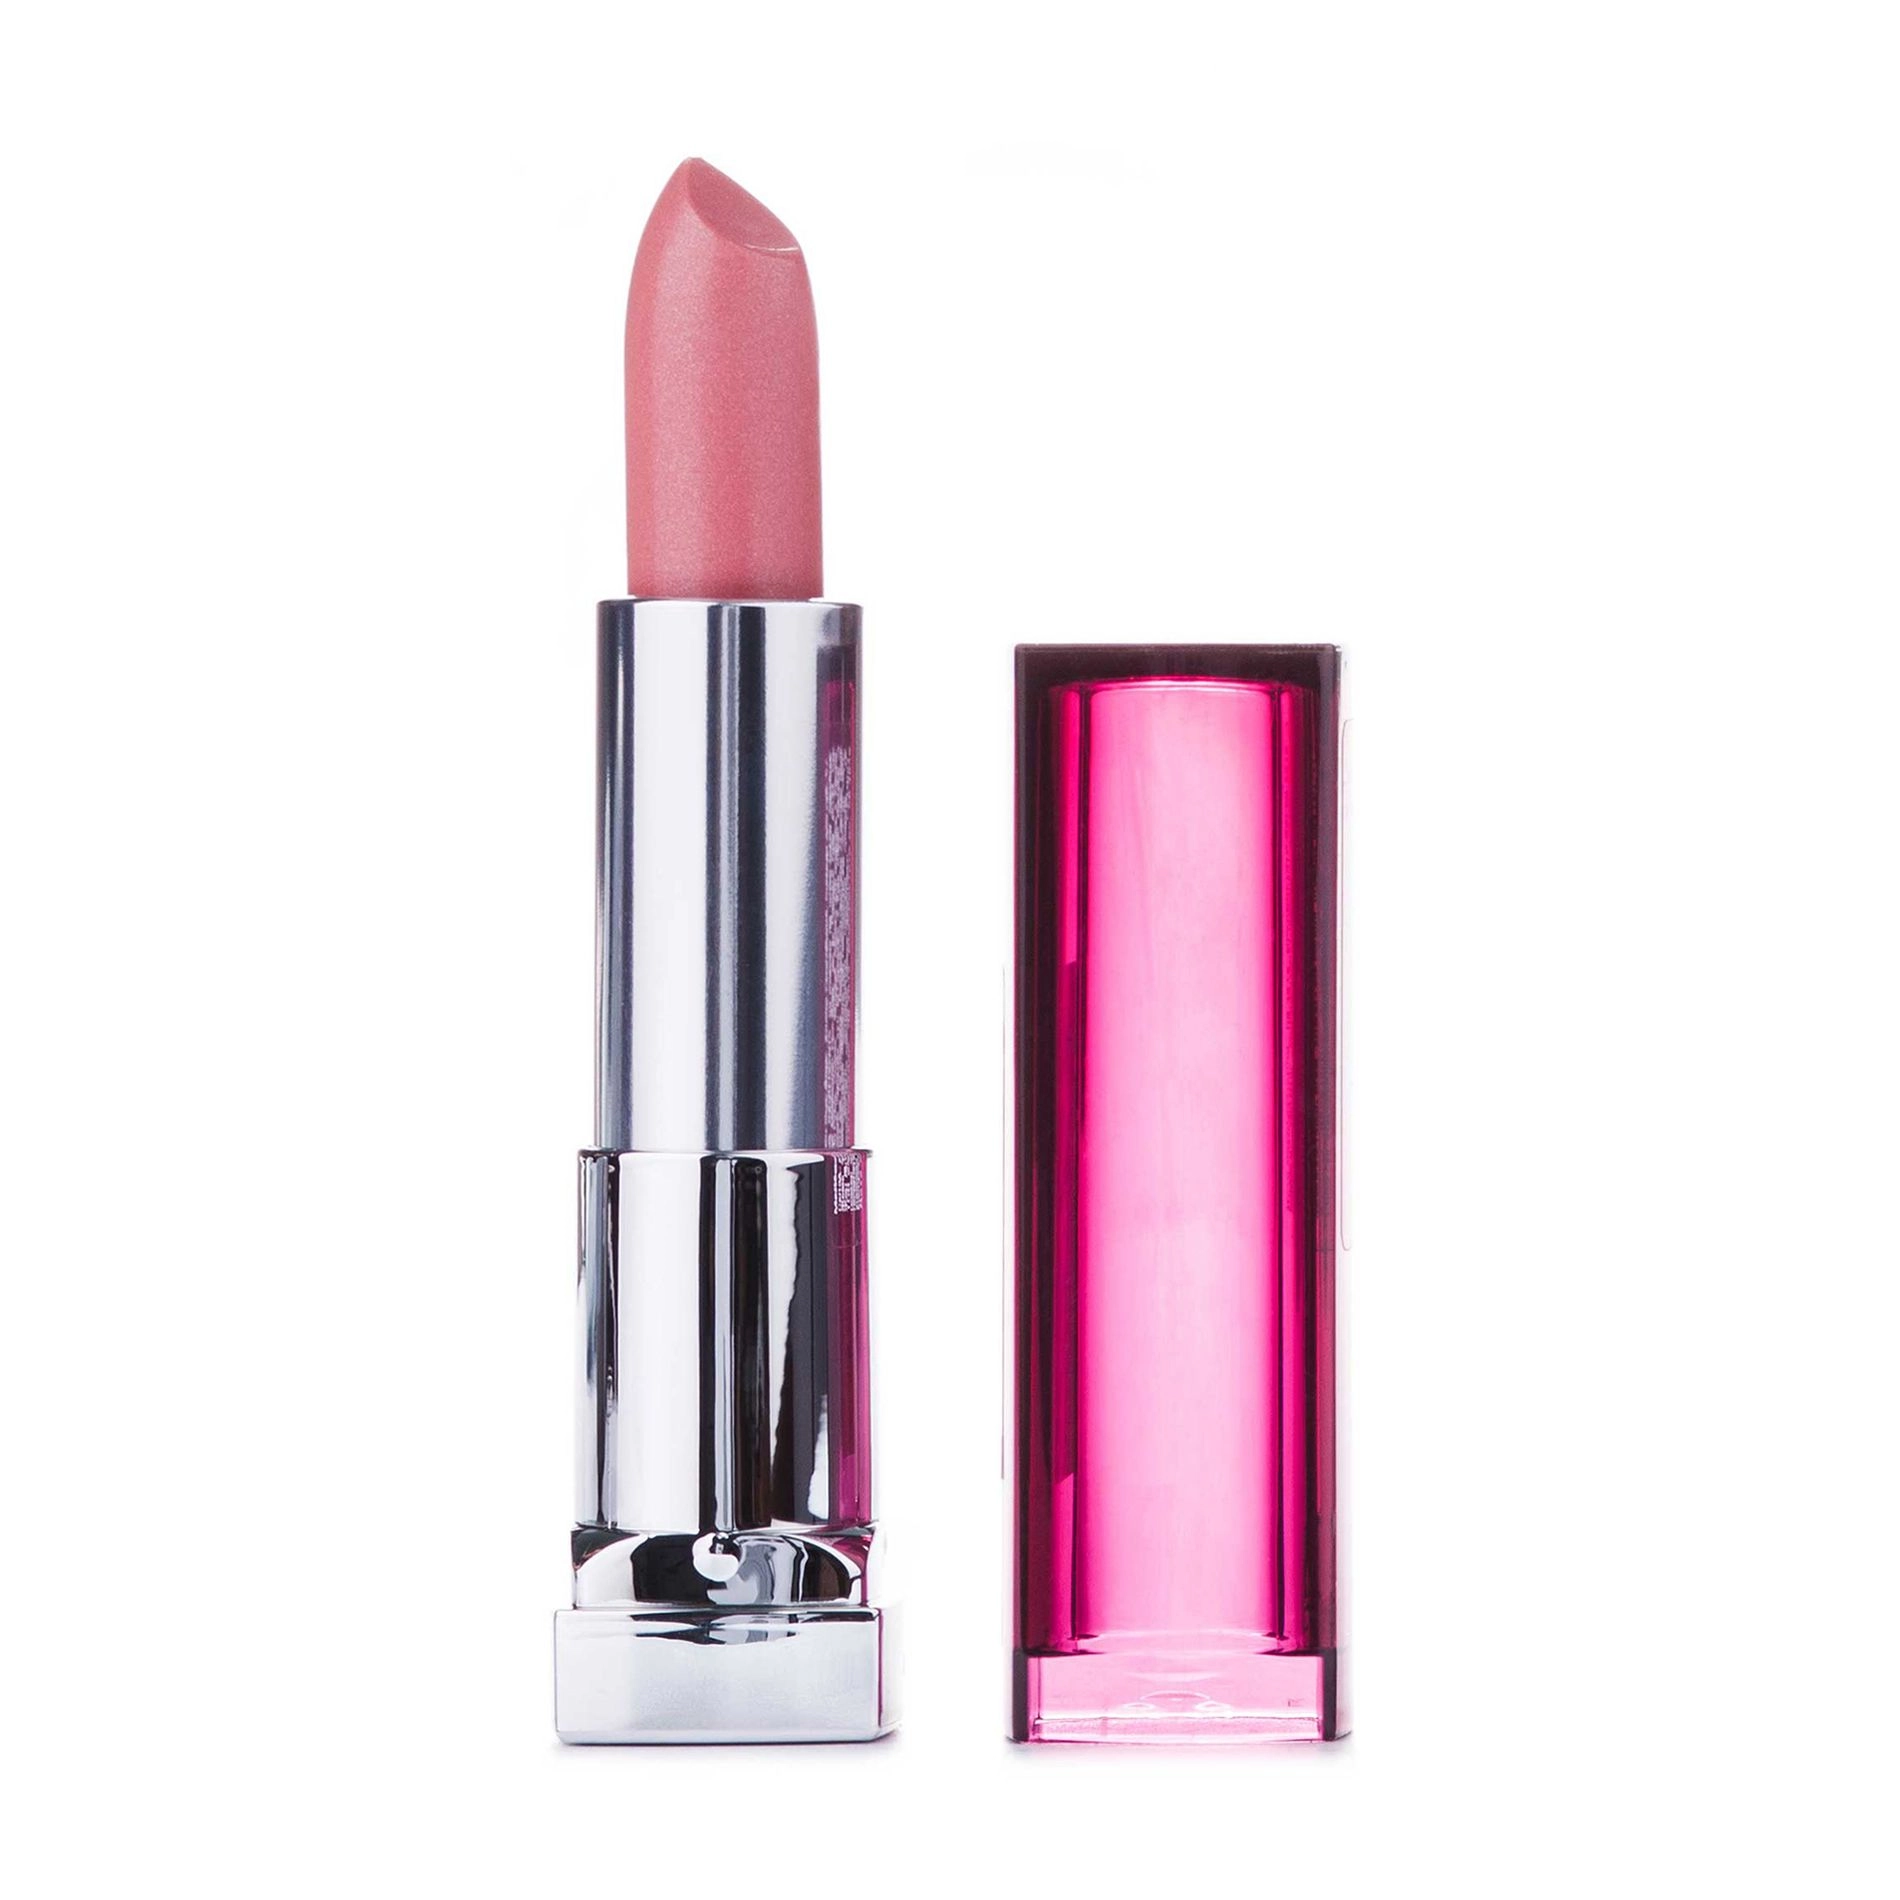 Maybelline New York Помада для губ Color Sensational 132 Sweet Pink, 5 г -  купить, цена, отзывы - Icosmo